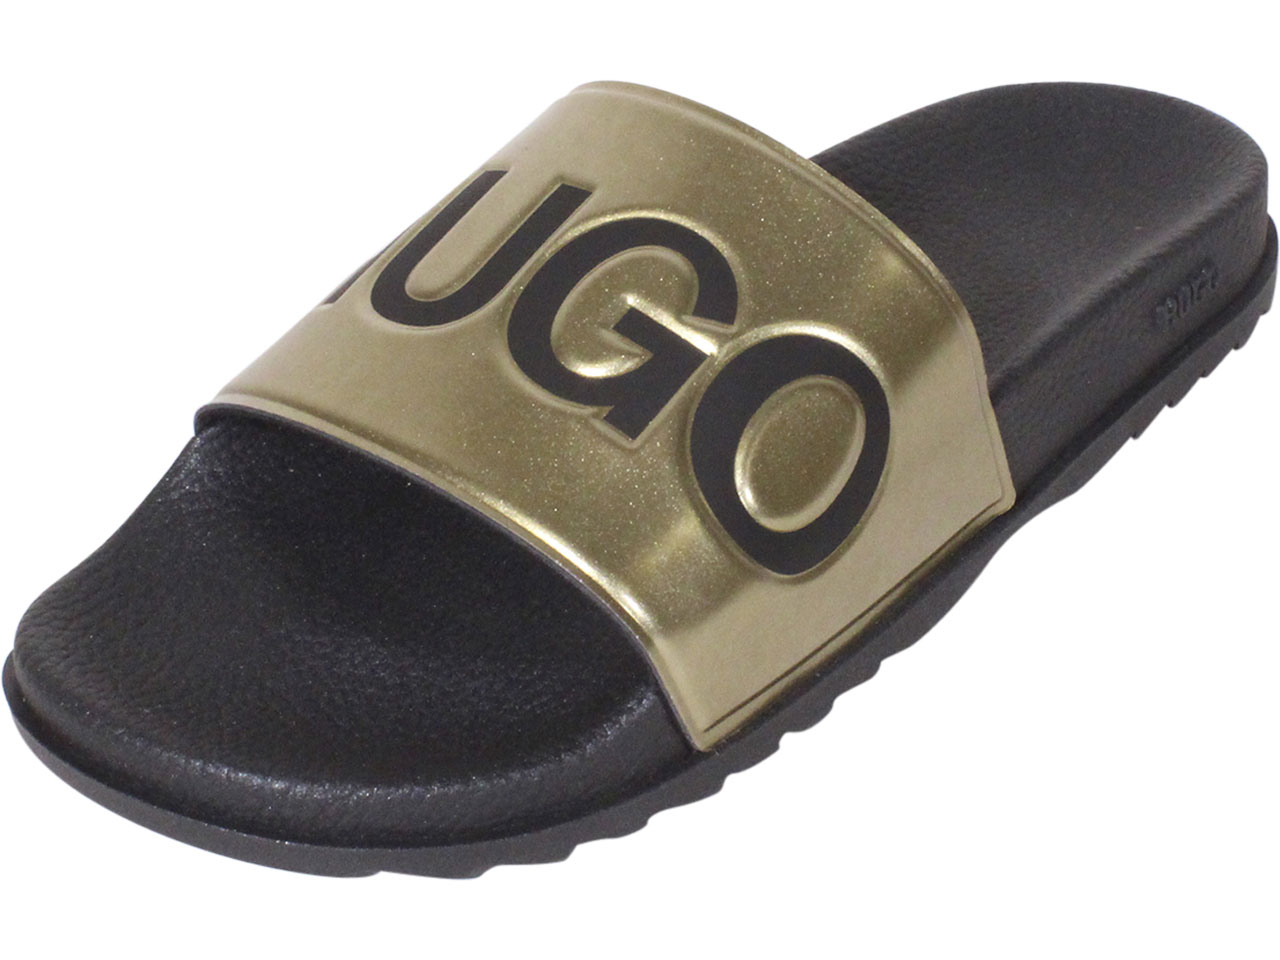 Hugo Boss Match Slides Men's Sandals Shoes 50431386 JoyLot.com